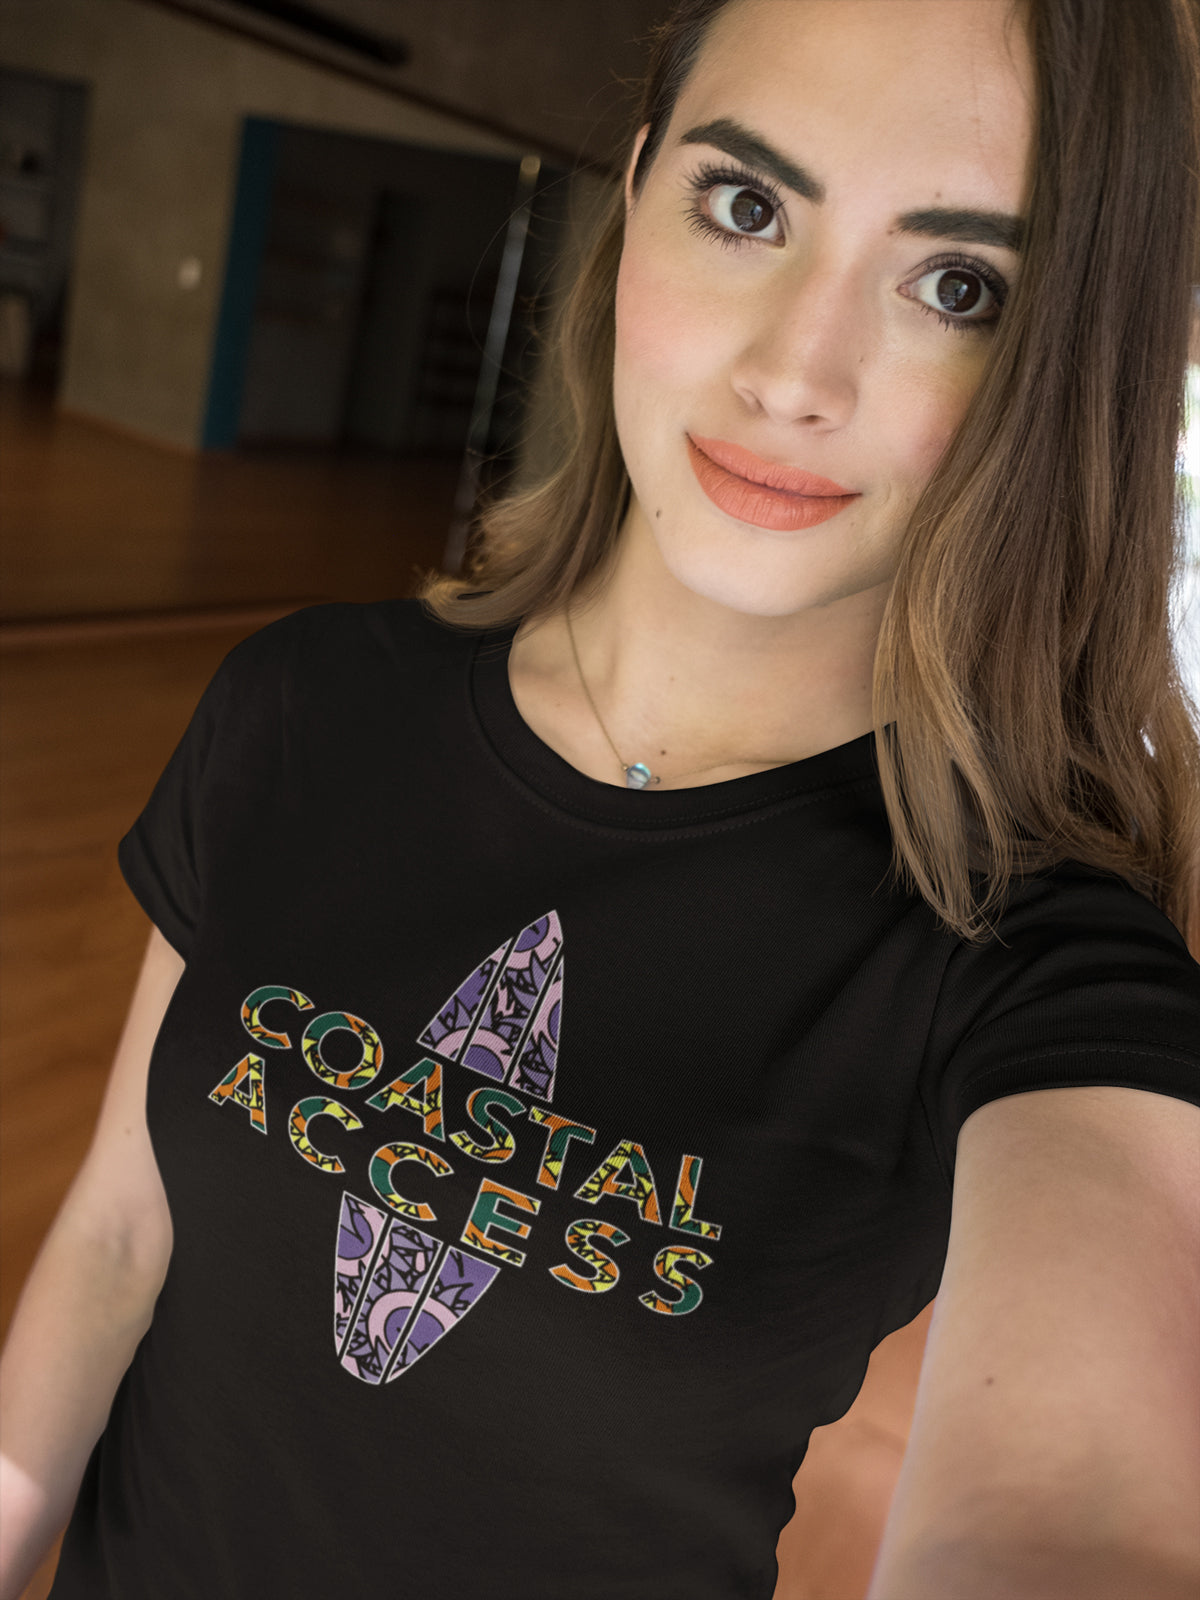 Coastal Access Women's T-shirt (6 colors)